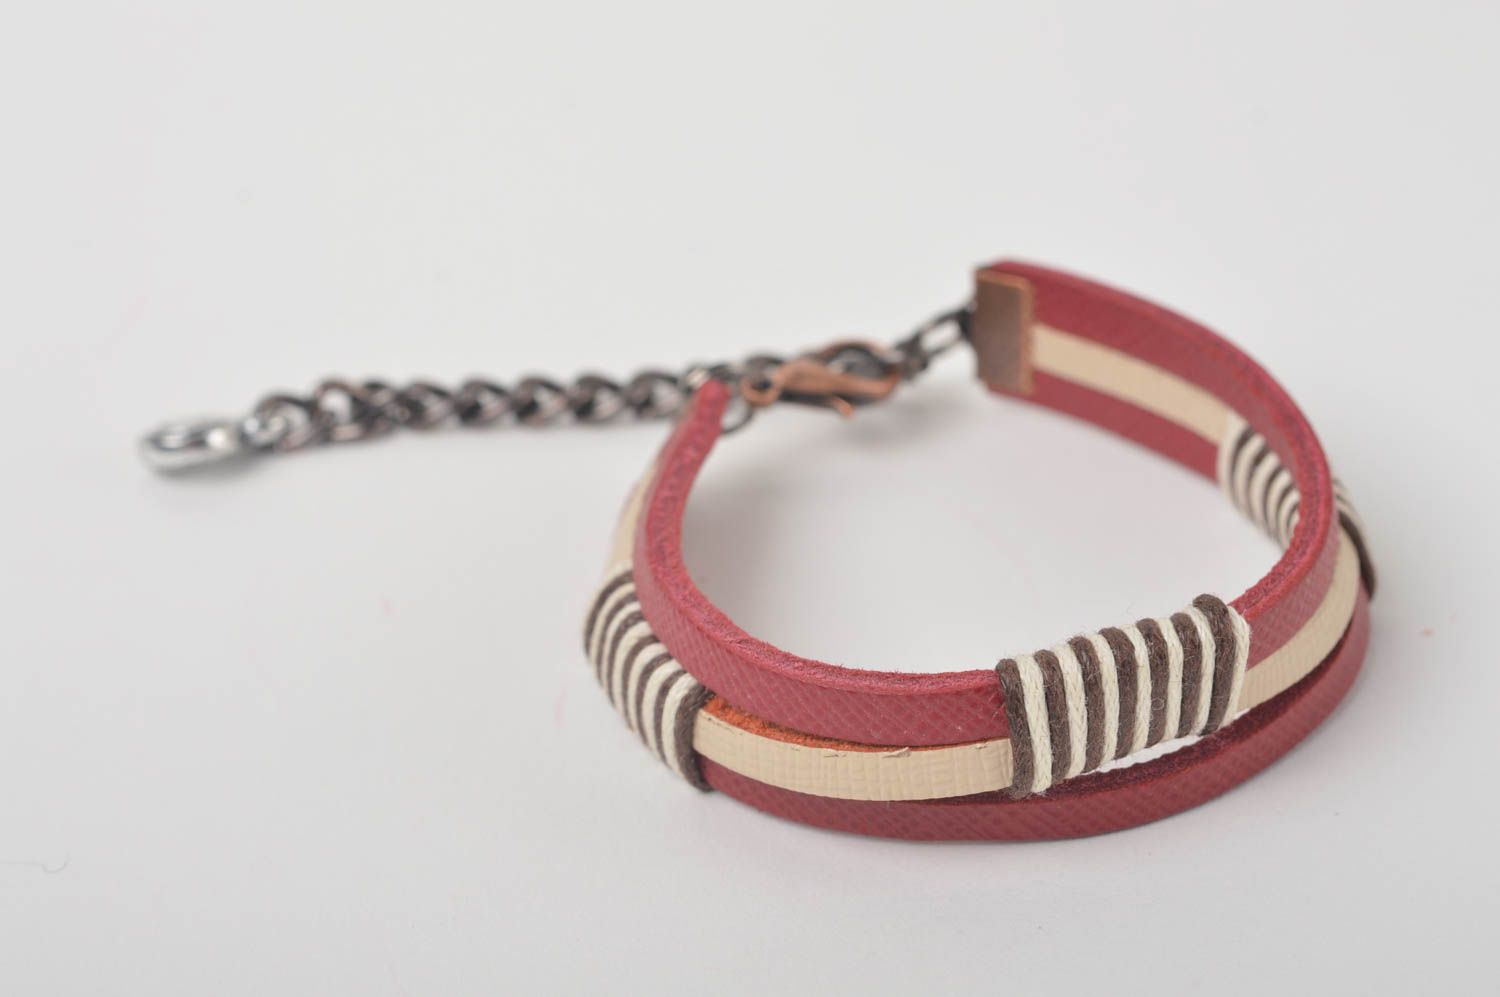 Stylish handmade leather bracelet leather goods wrist bracelet designs photo 2